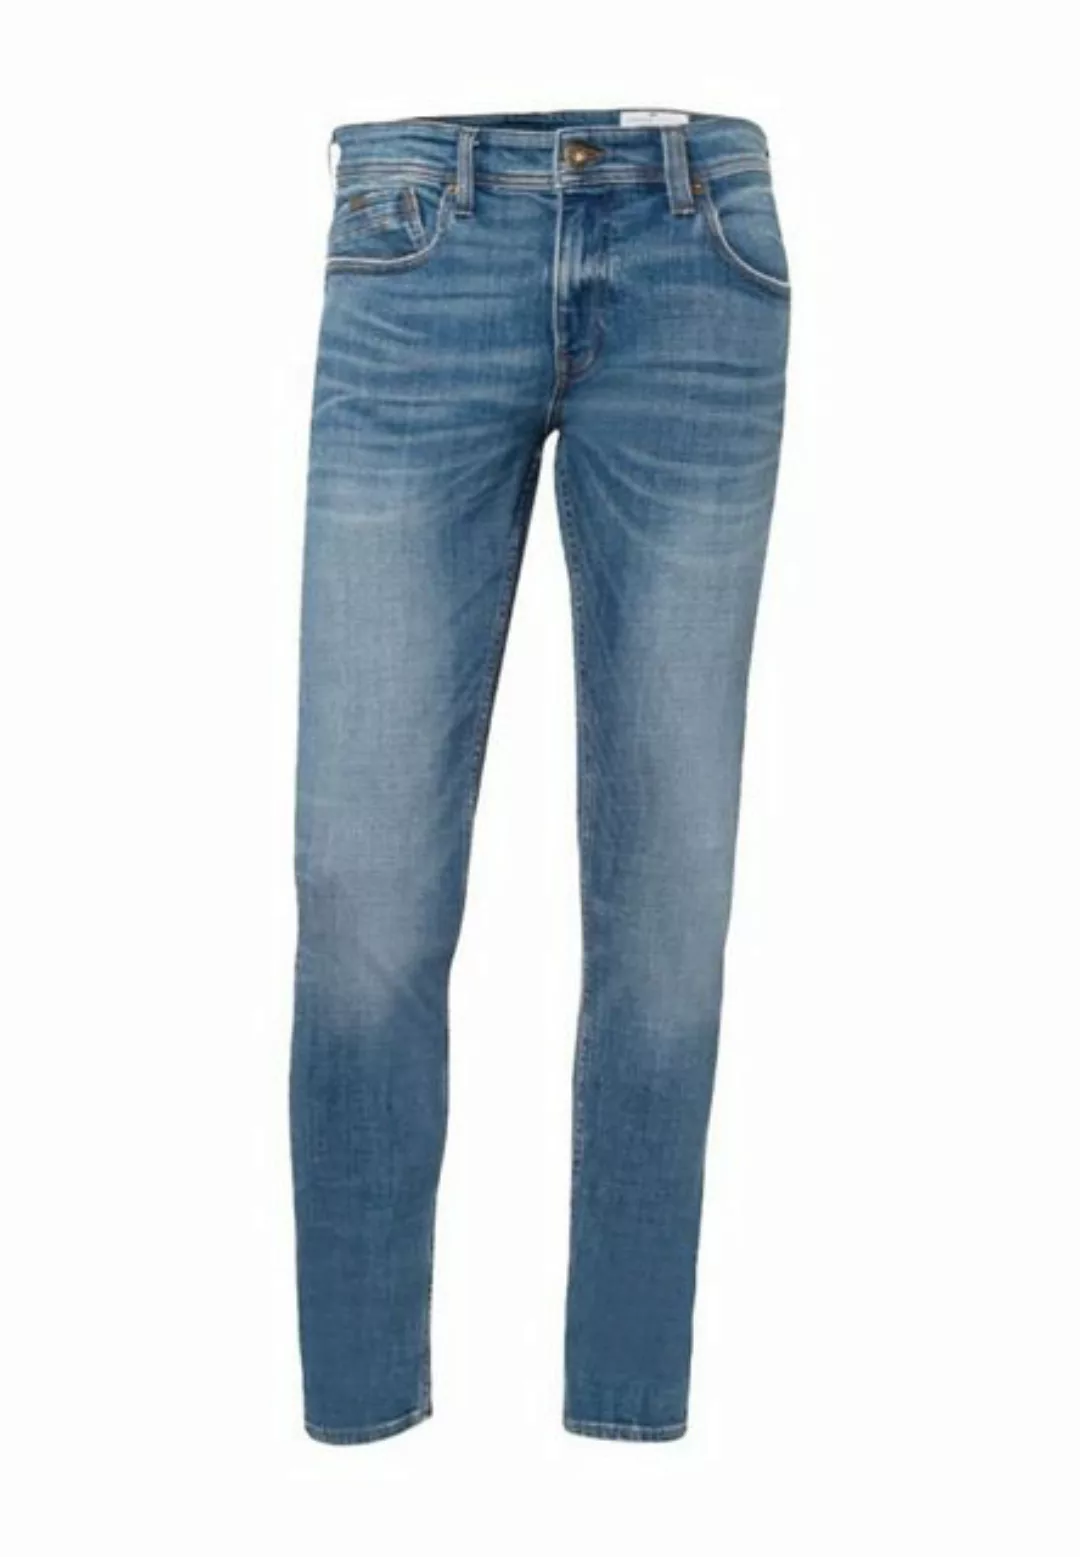 Cross Jeans Herren Jeans Jimi - Slim Tapered Fit - Blau - Dirty Blue günstig online kaufen